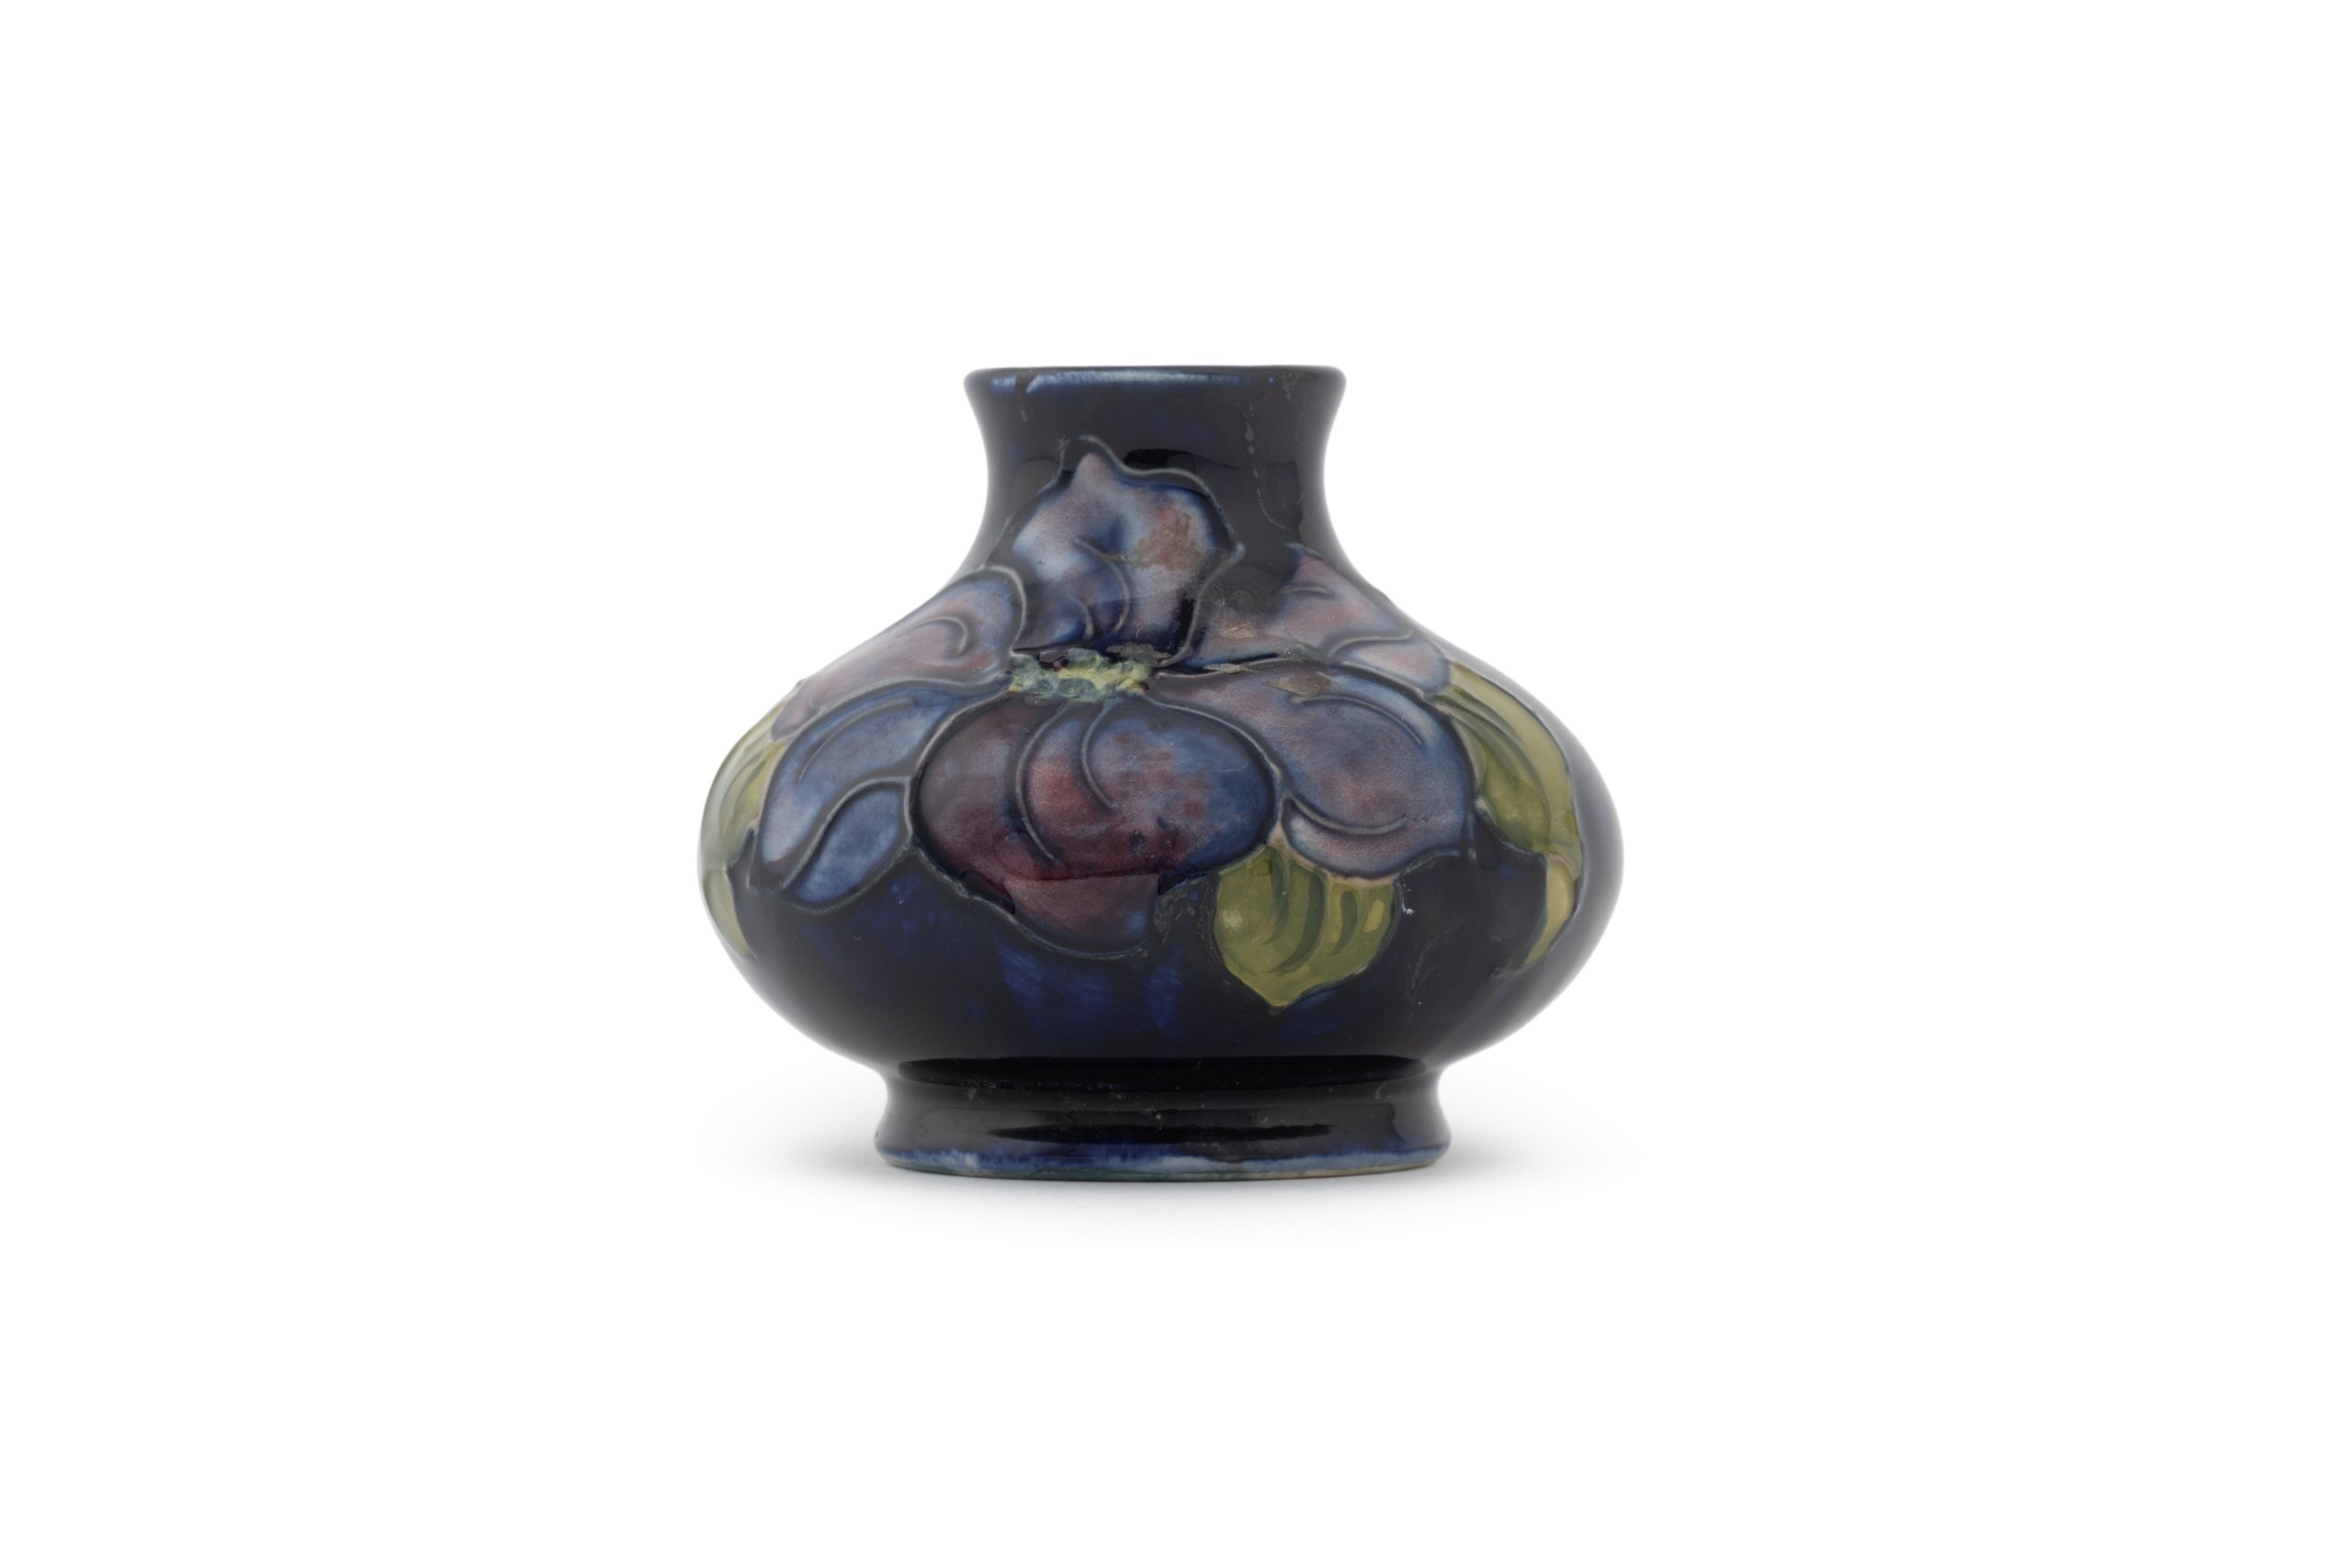 Vase made by Moorcroft